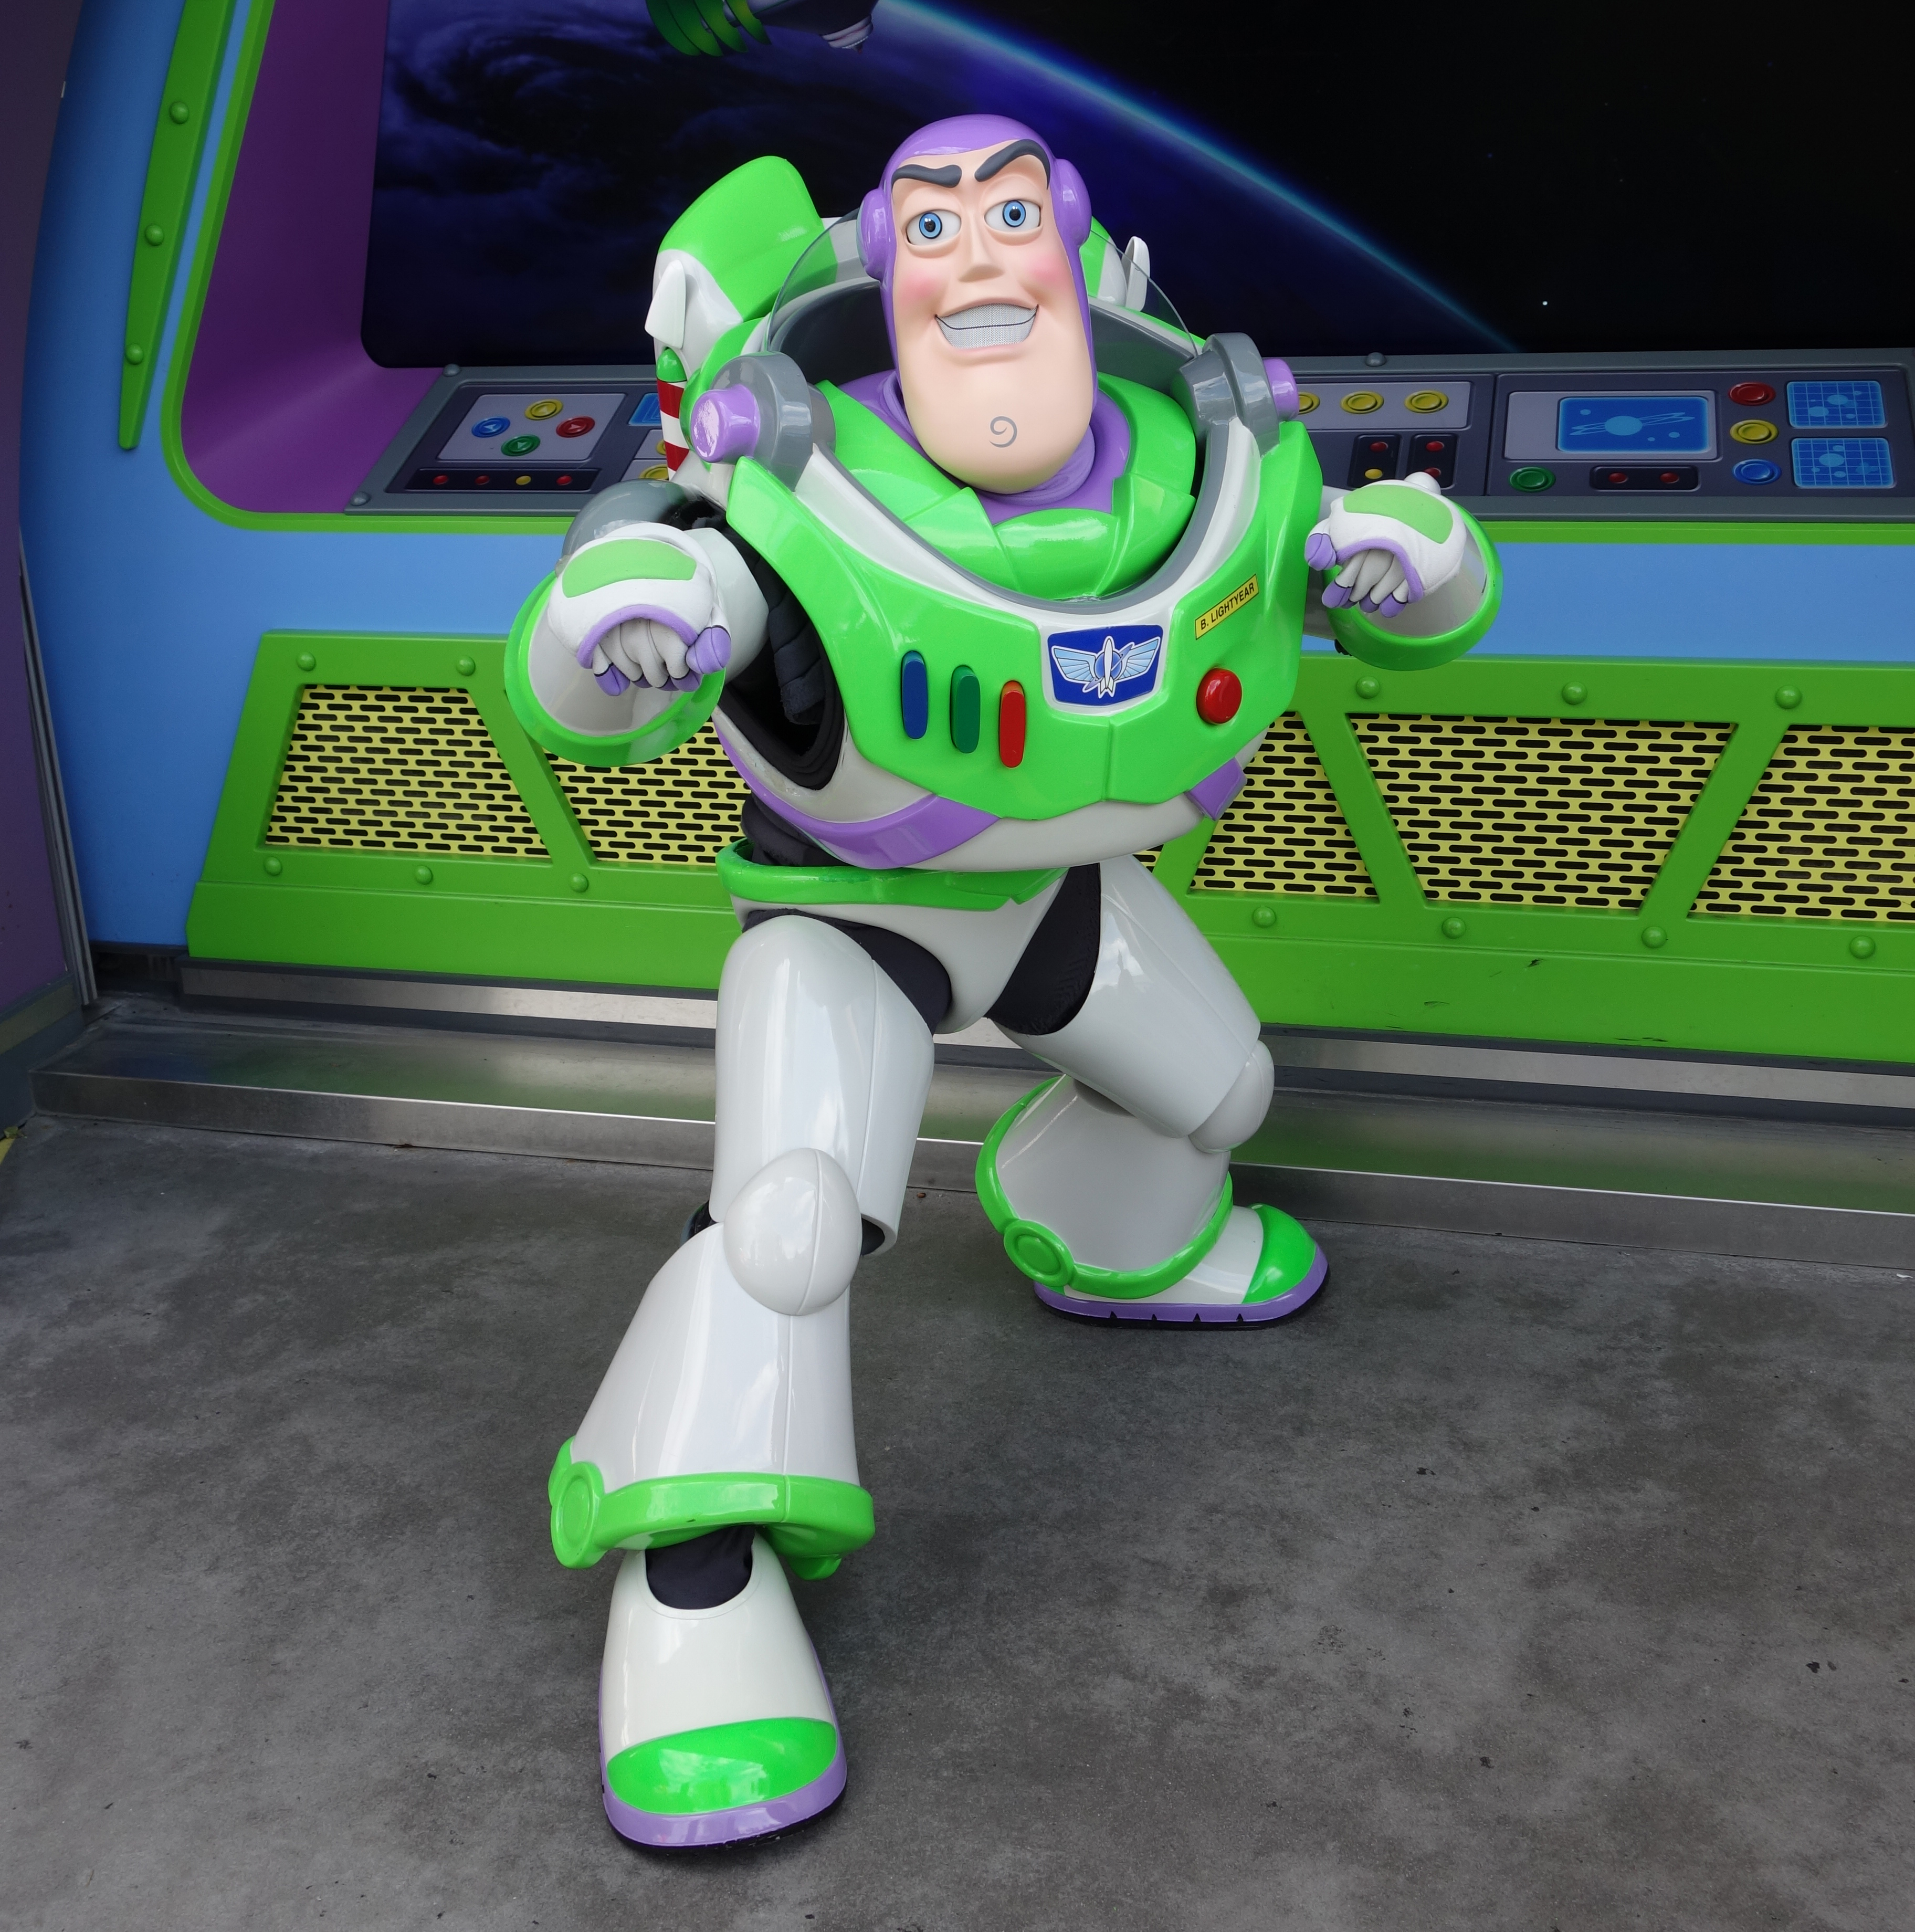 Buzz Lightyear at Tomorrowland in Magic Kingdom - KennythePirate.com